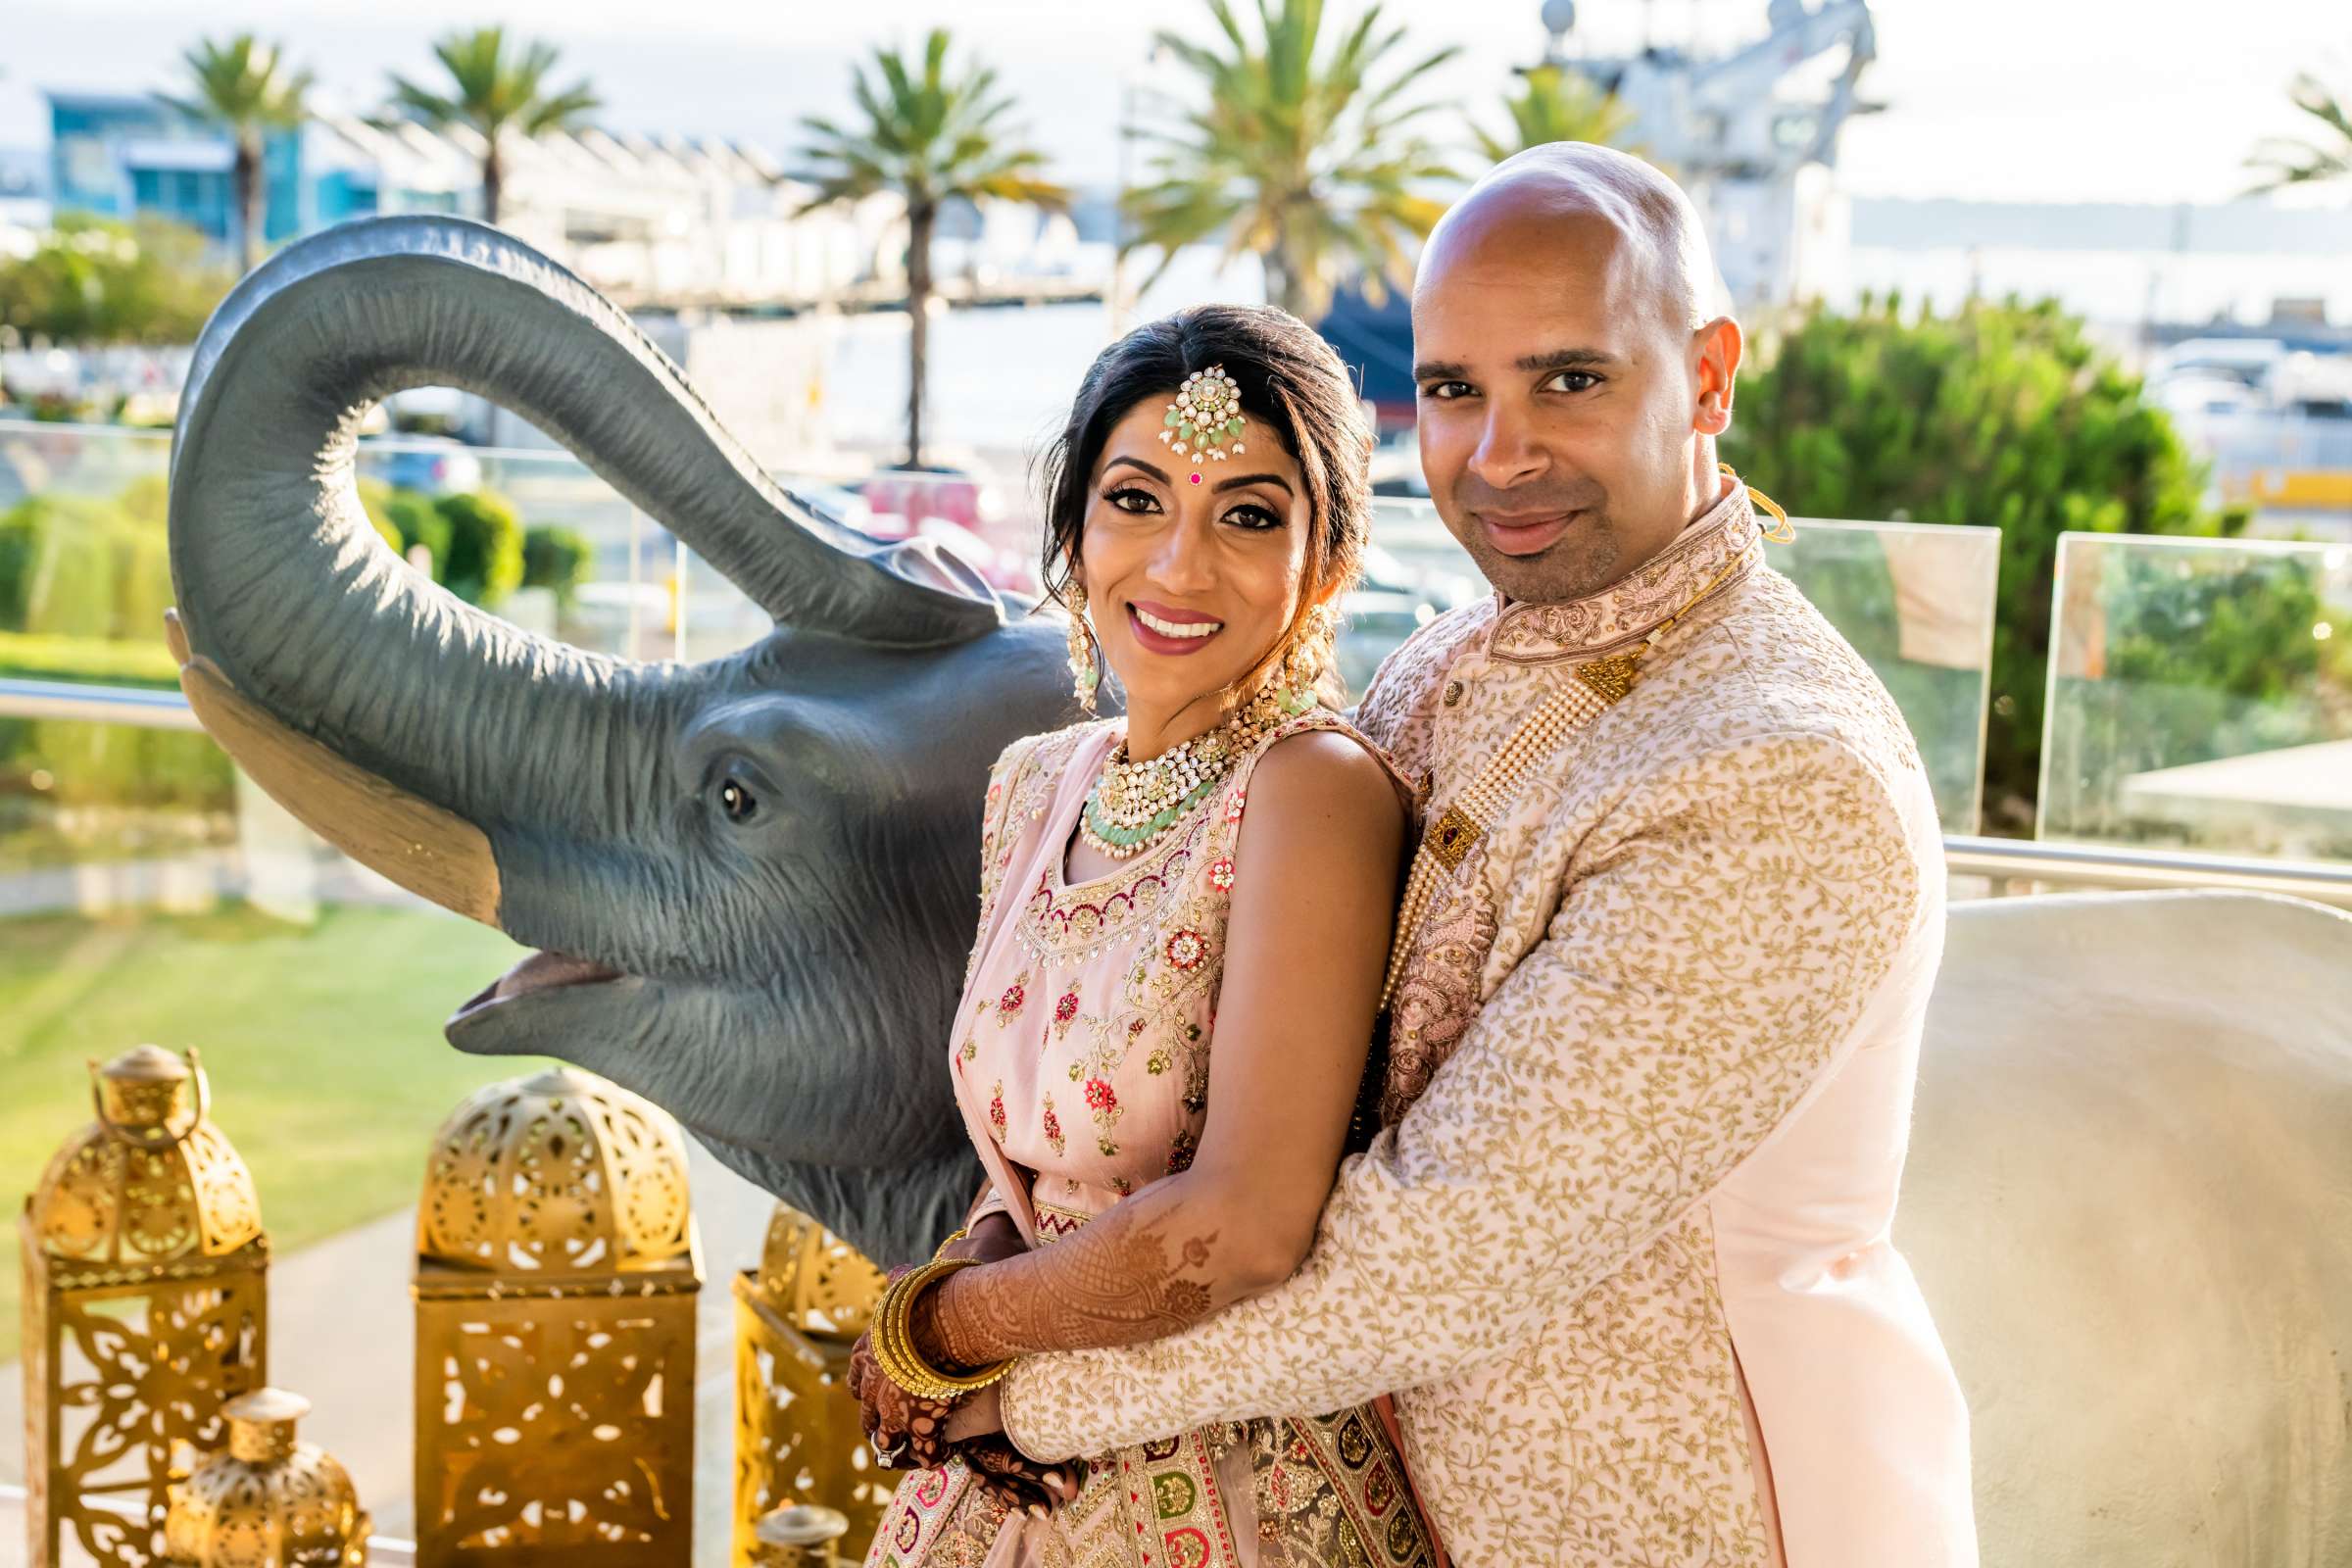 San Diego Mission Bay Resort Wedding coordinated by Sweet Love Designs, Anita and Hari Sangeet Wedding Photo #2 by True Photography